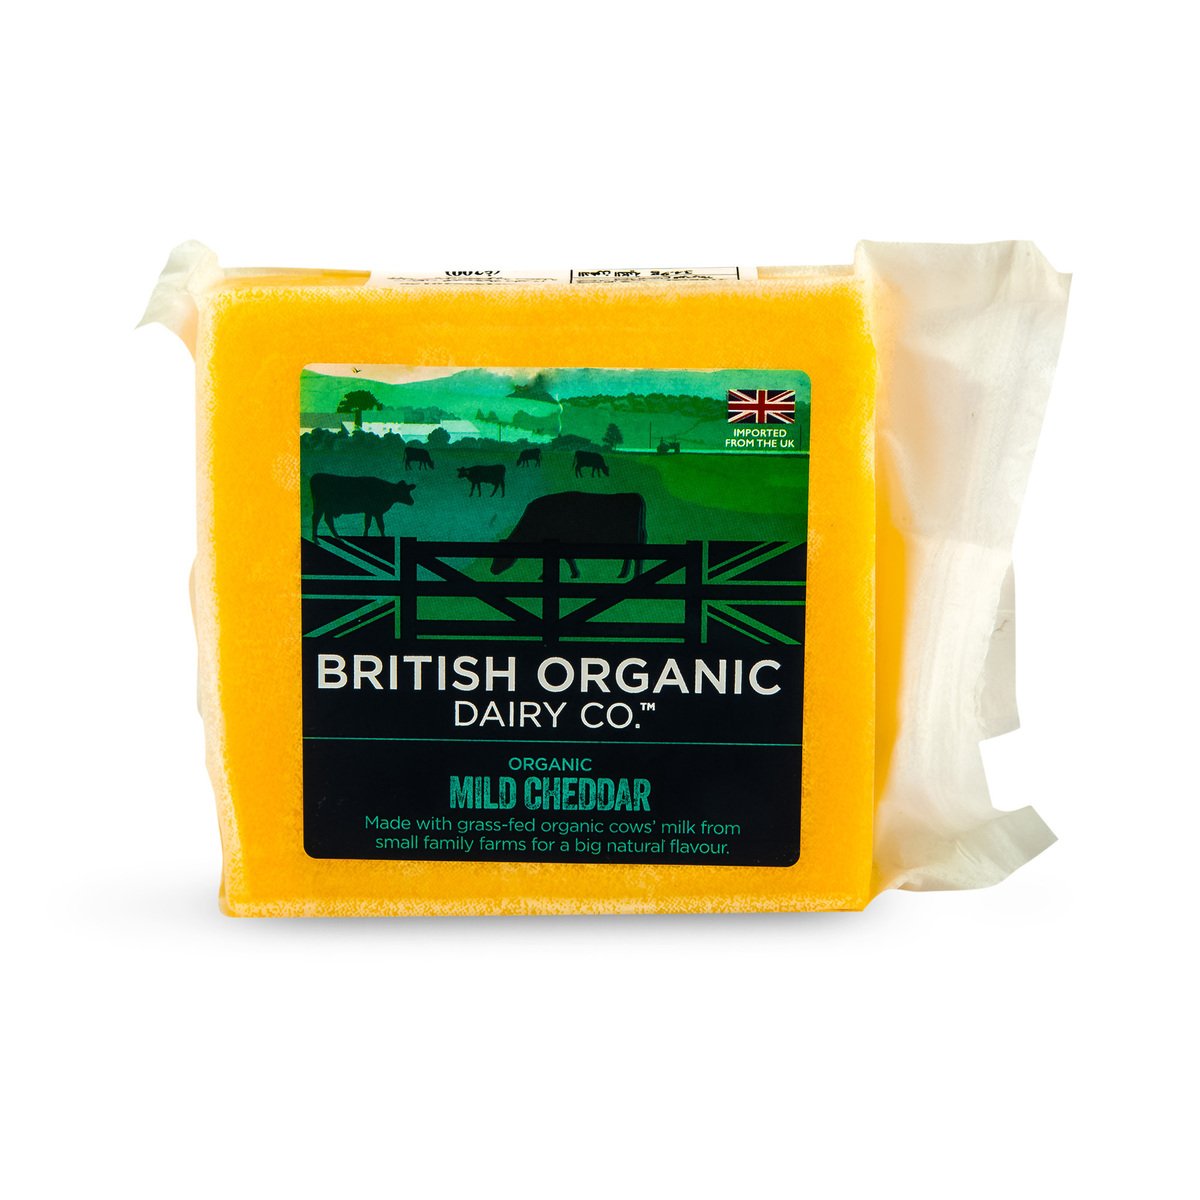 British Organic Dairy Co. Organic Mild Cheddar 200 g